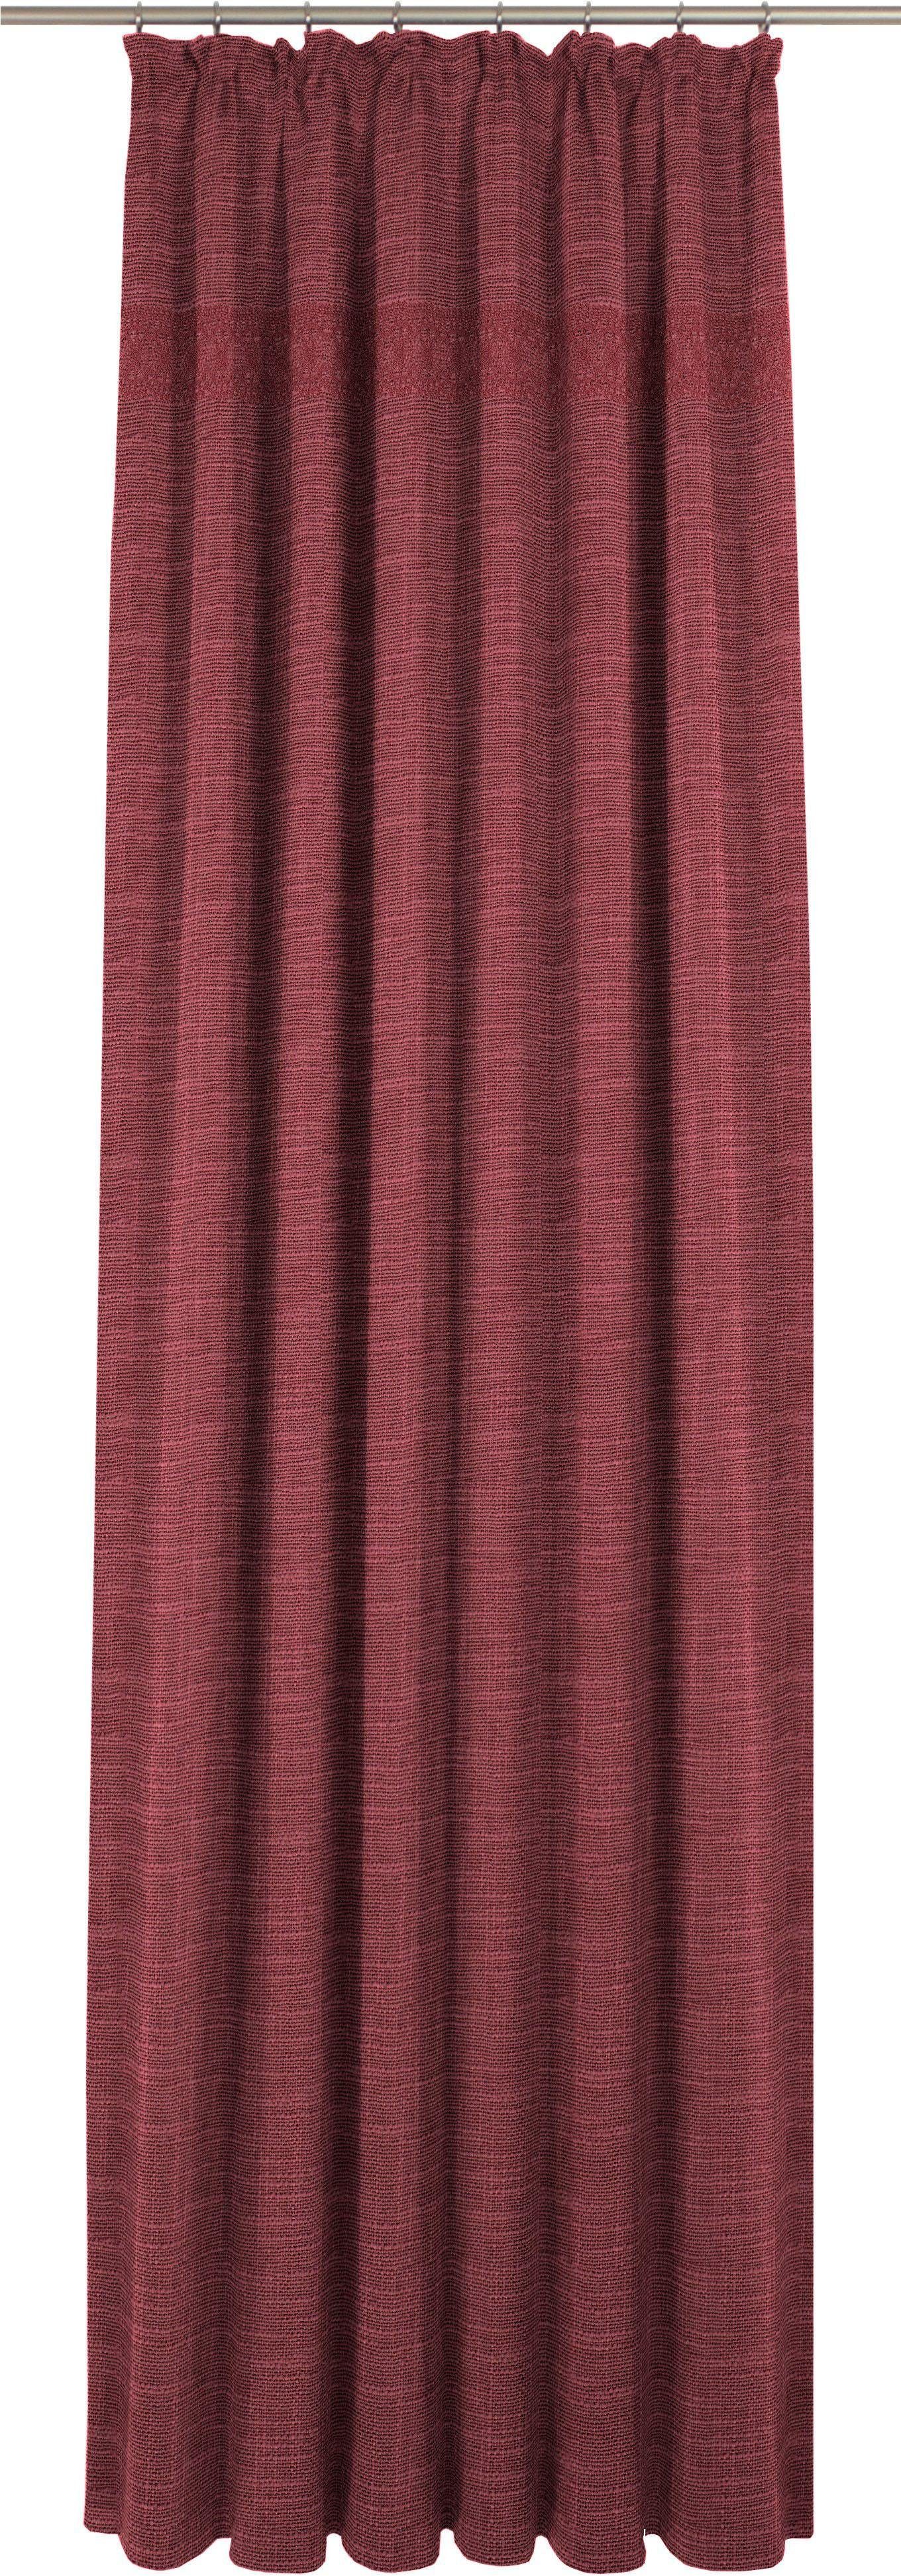 Vorhang Wiessee, Wirth, Kräuselband (1 Jacquard rosa blickdicht, St)